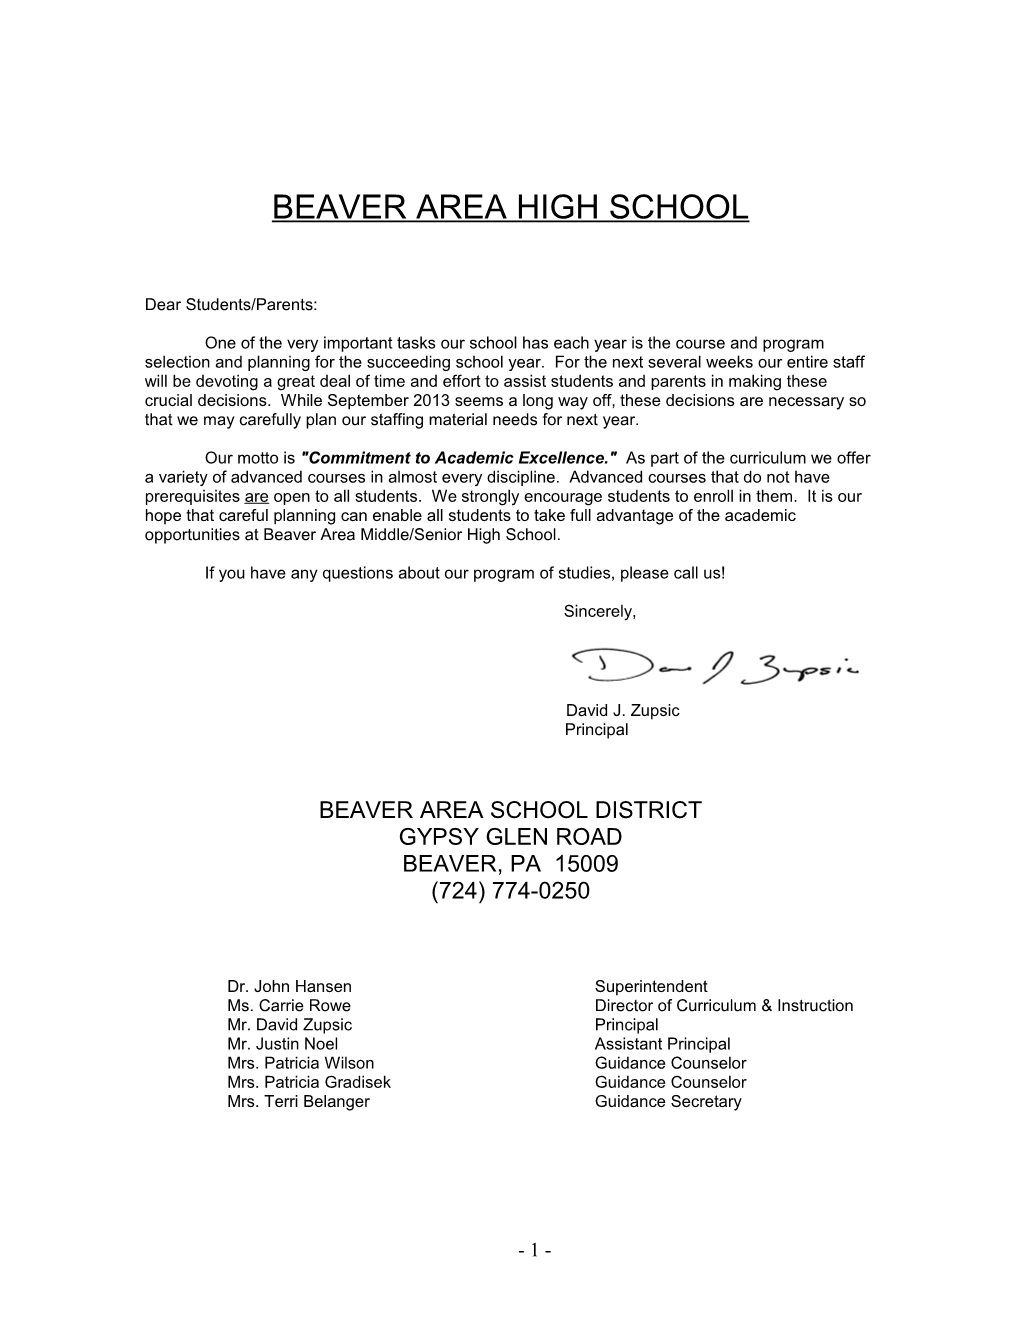 Beaver Area High School